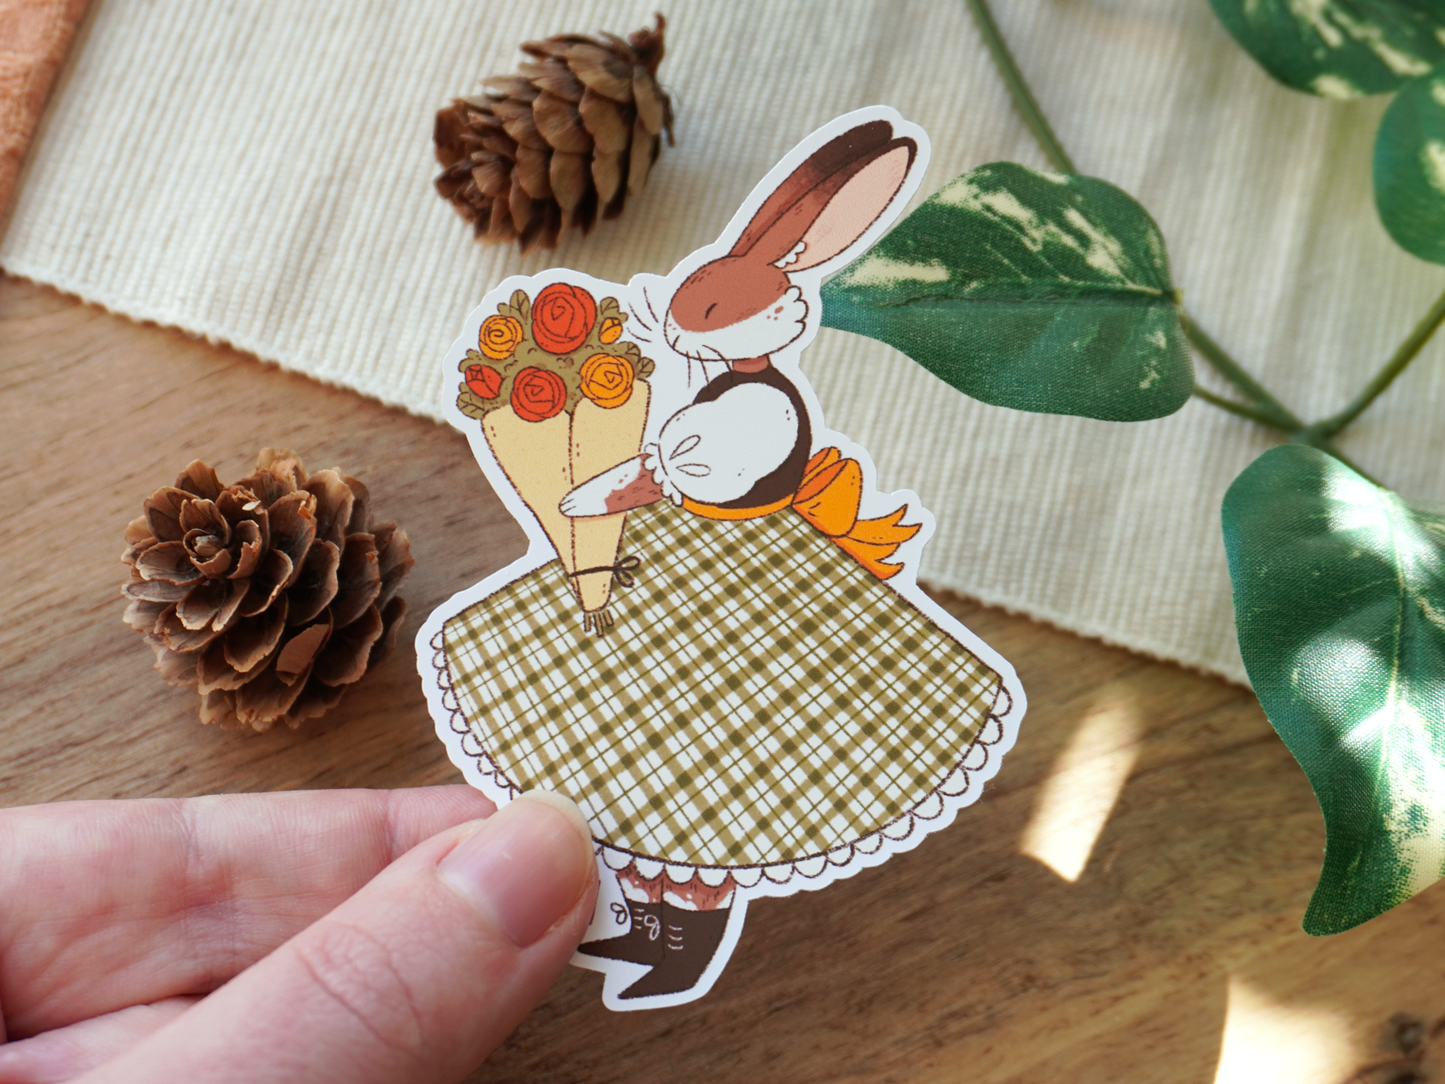 Spring Bunny Sticker